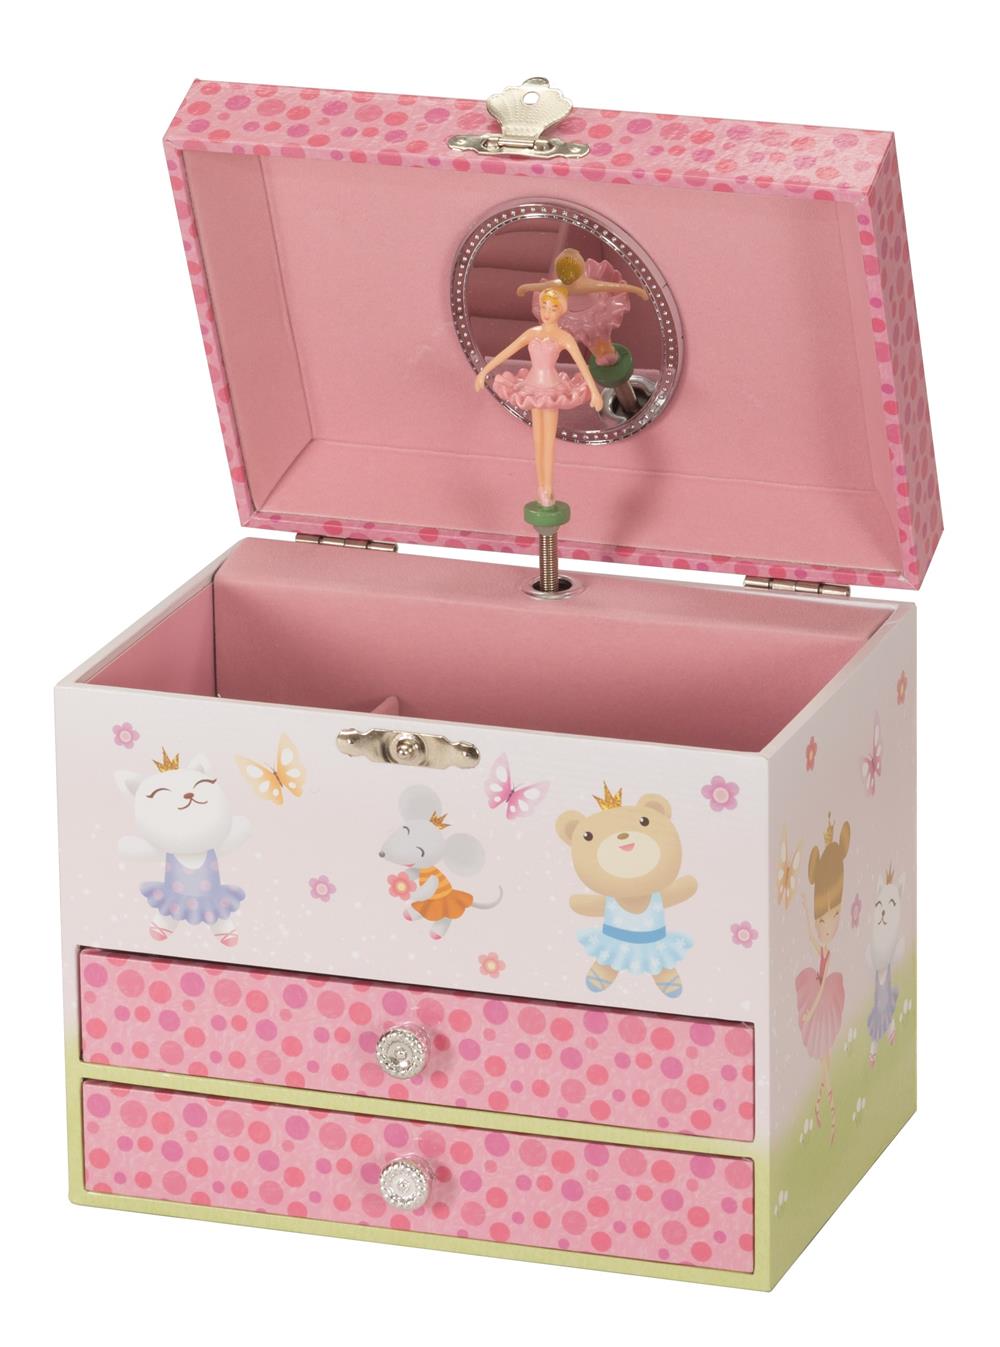 Rachel Dancing Princess musical jewel case 2 pack